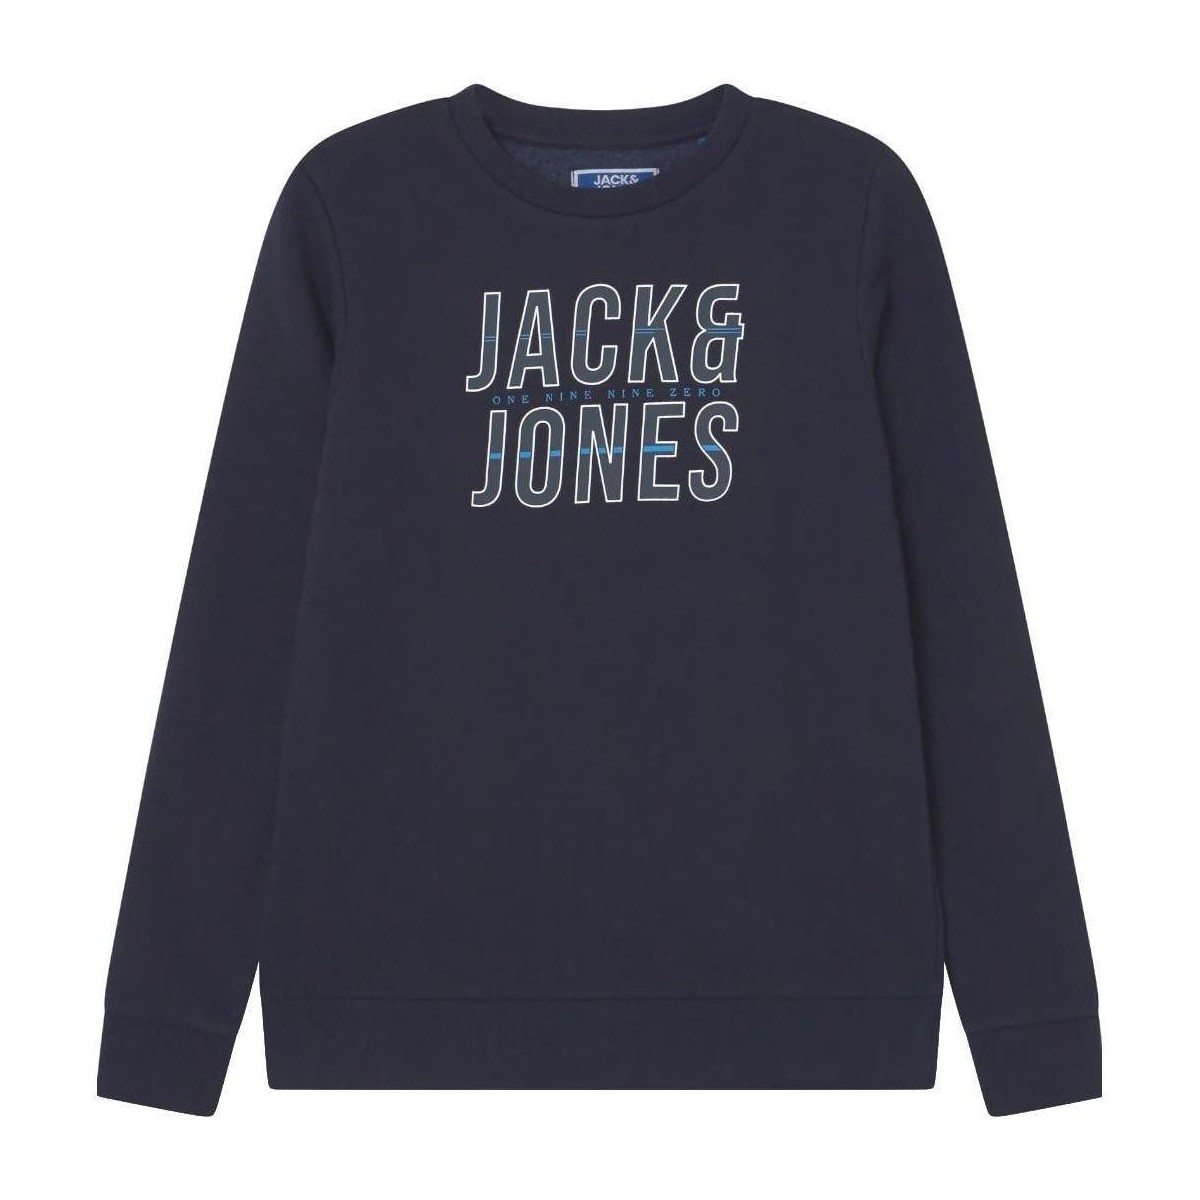 textil Dreng Sweatshirts Jack & Jones  Blå